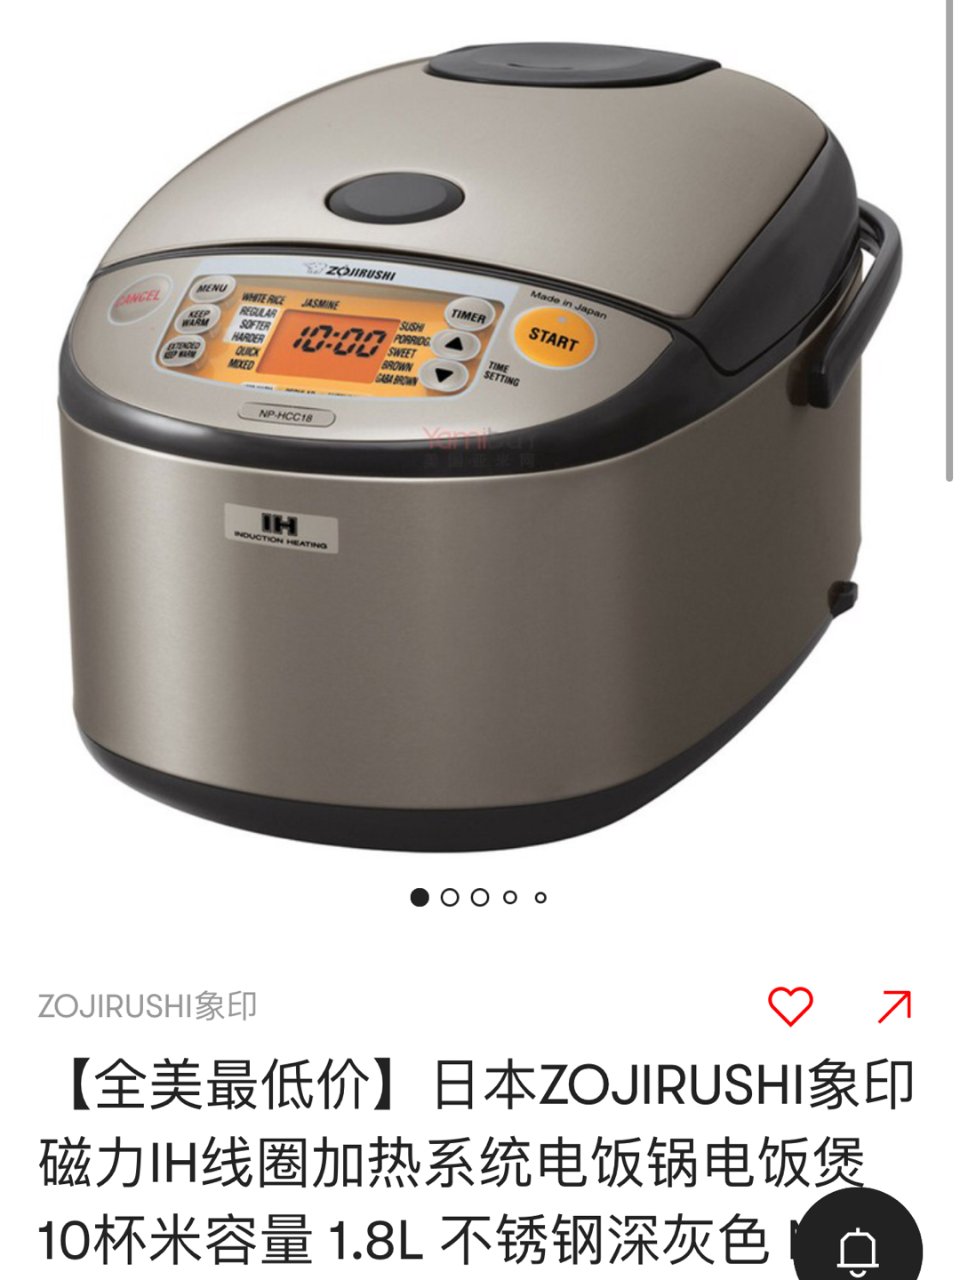 Zojirushi 象印,磁力IH线圈加热系统电饭锅电饭煲 10杯米容量 1.8L 不锈钢深灰色 NP-HCC18